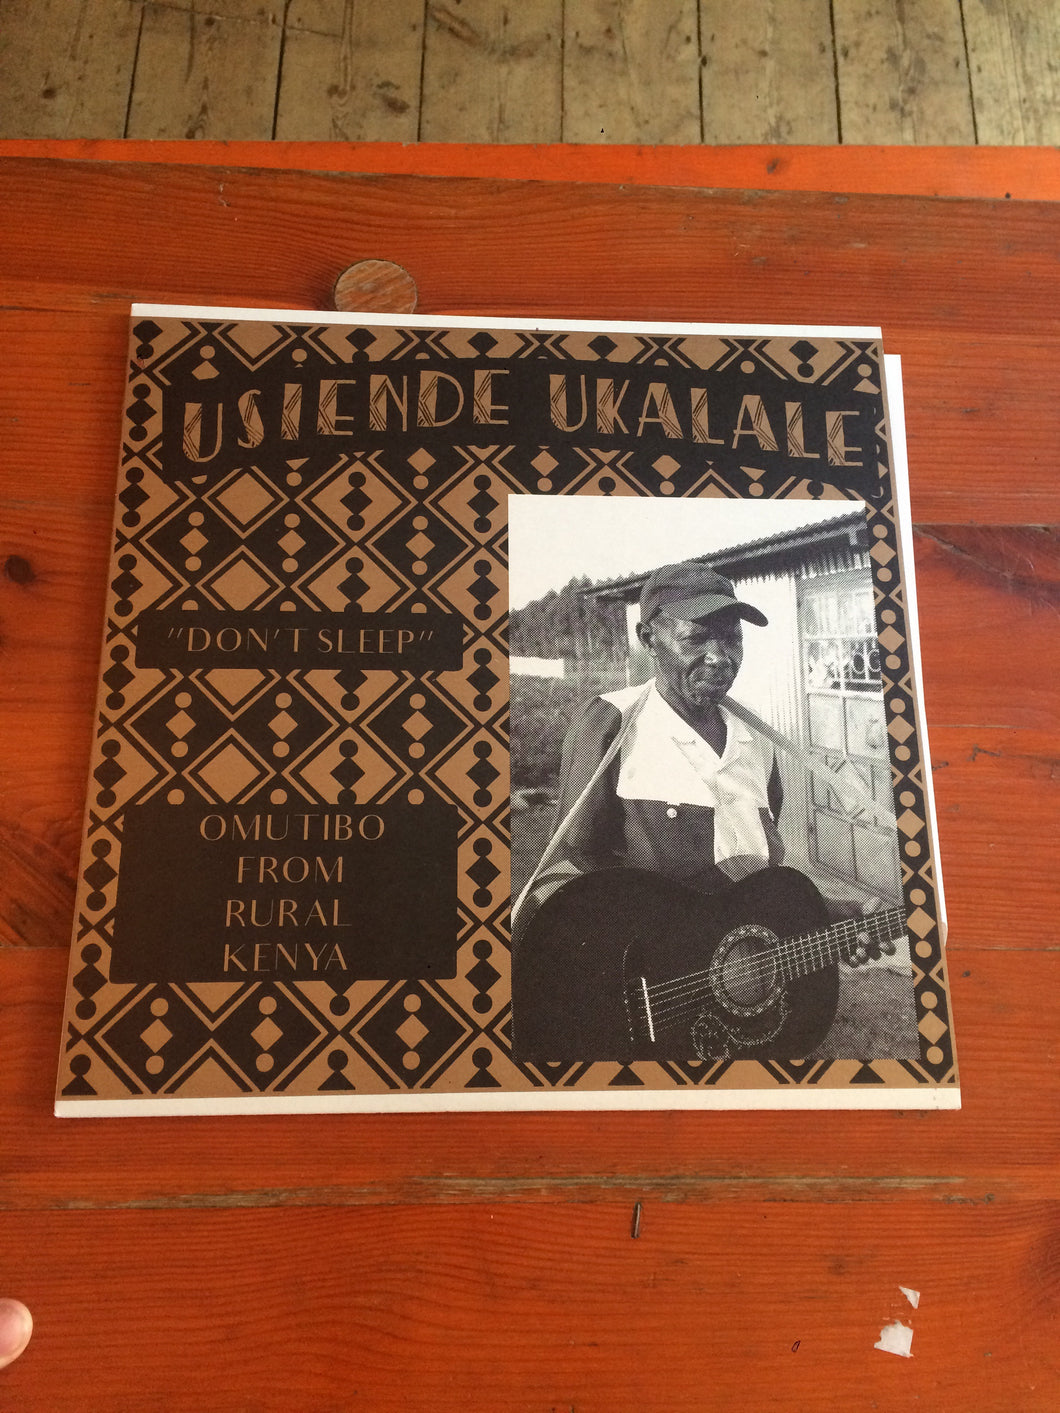 Usiende Ukalale - Don't Sleep: Omutibo From Rural Kenya